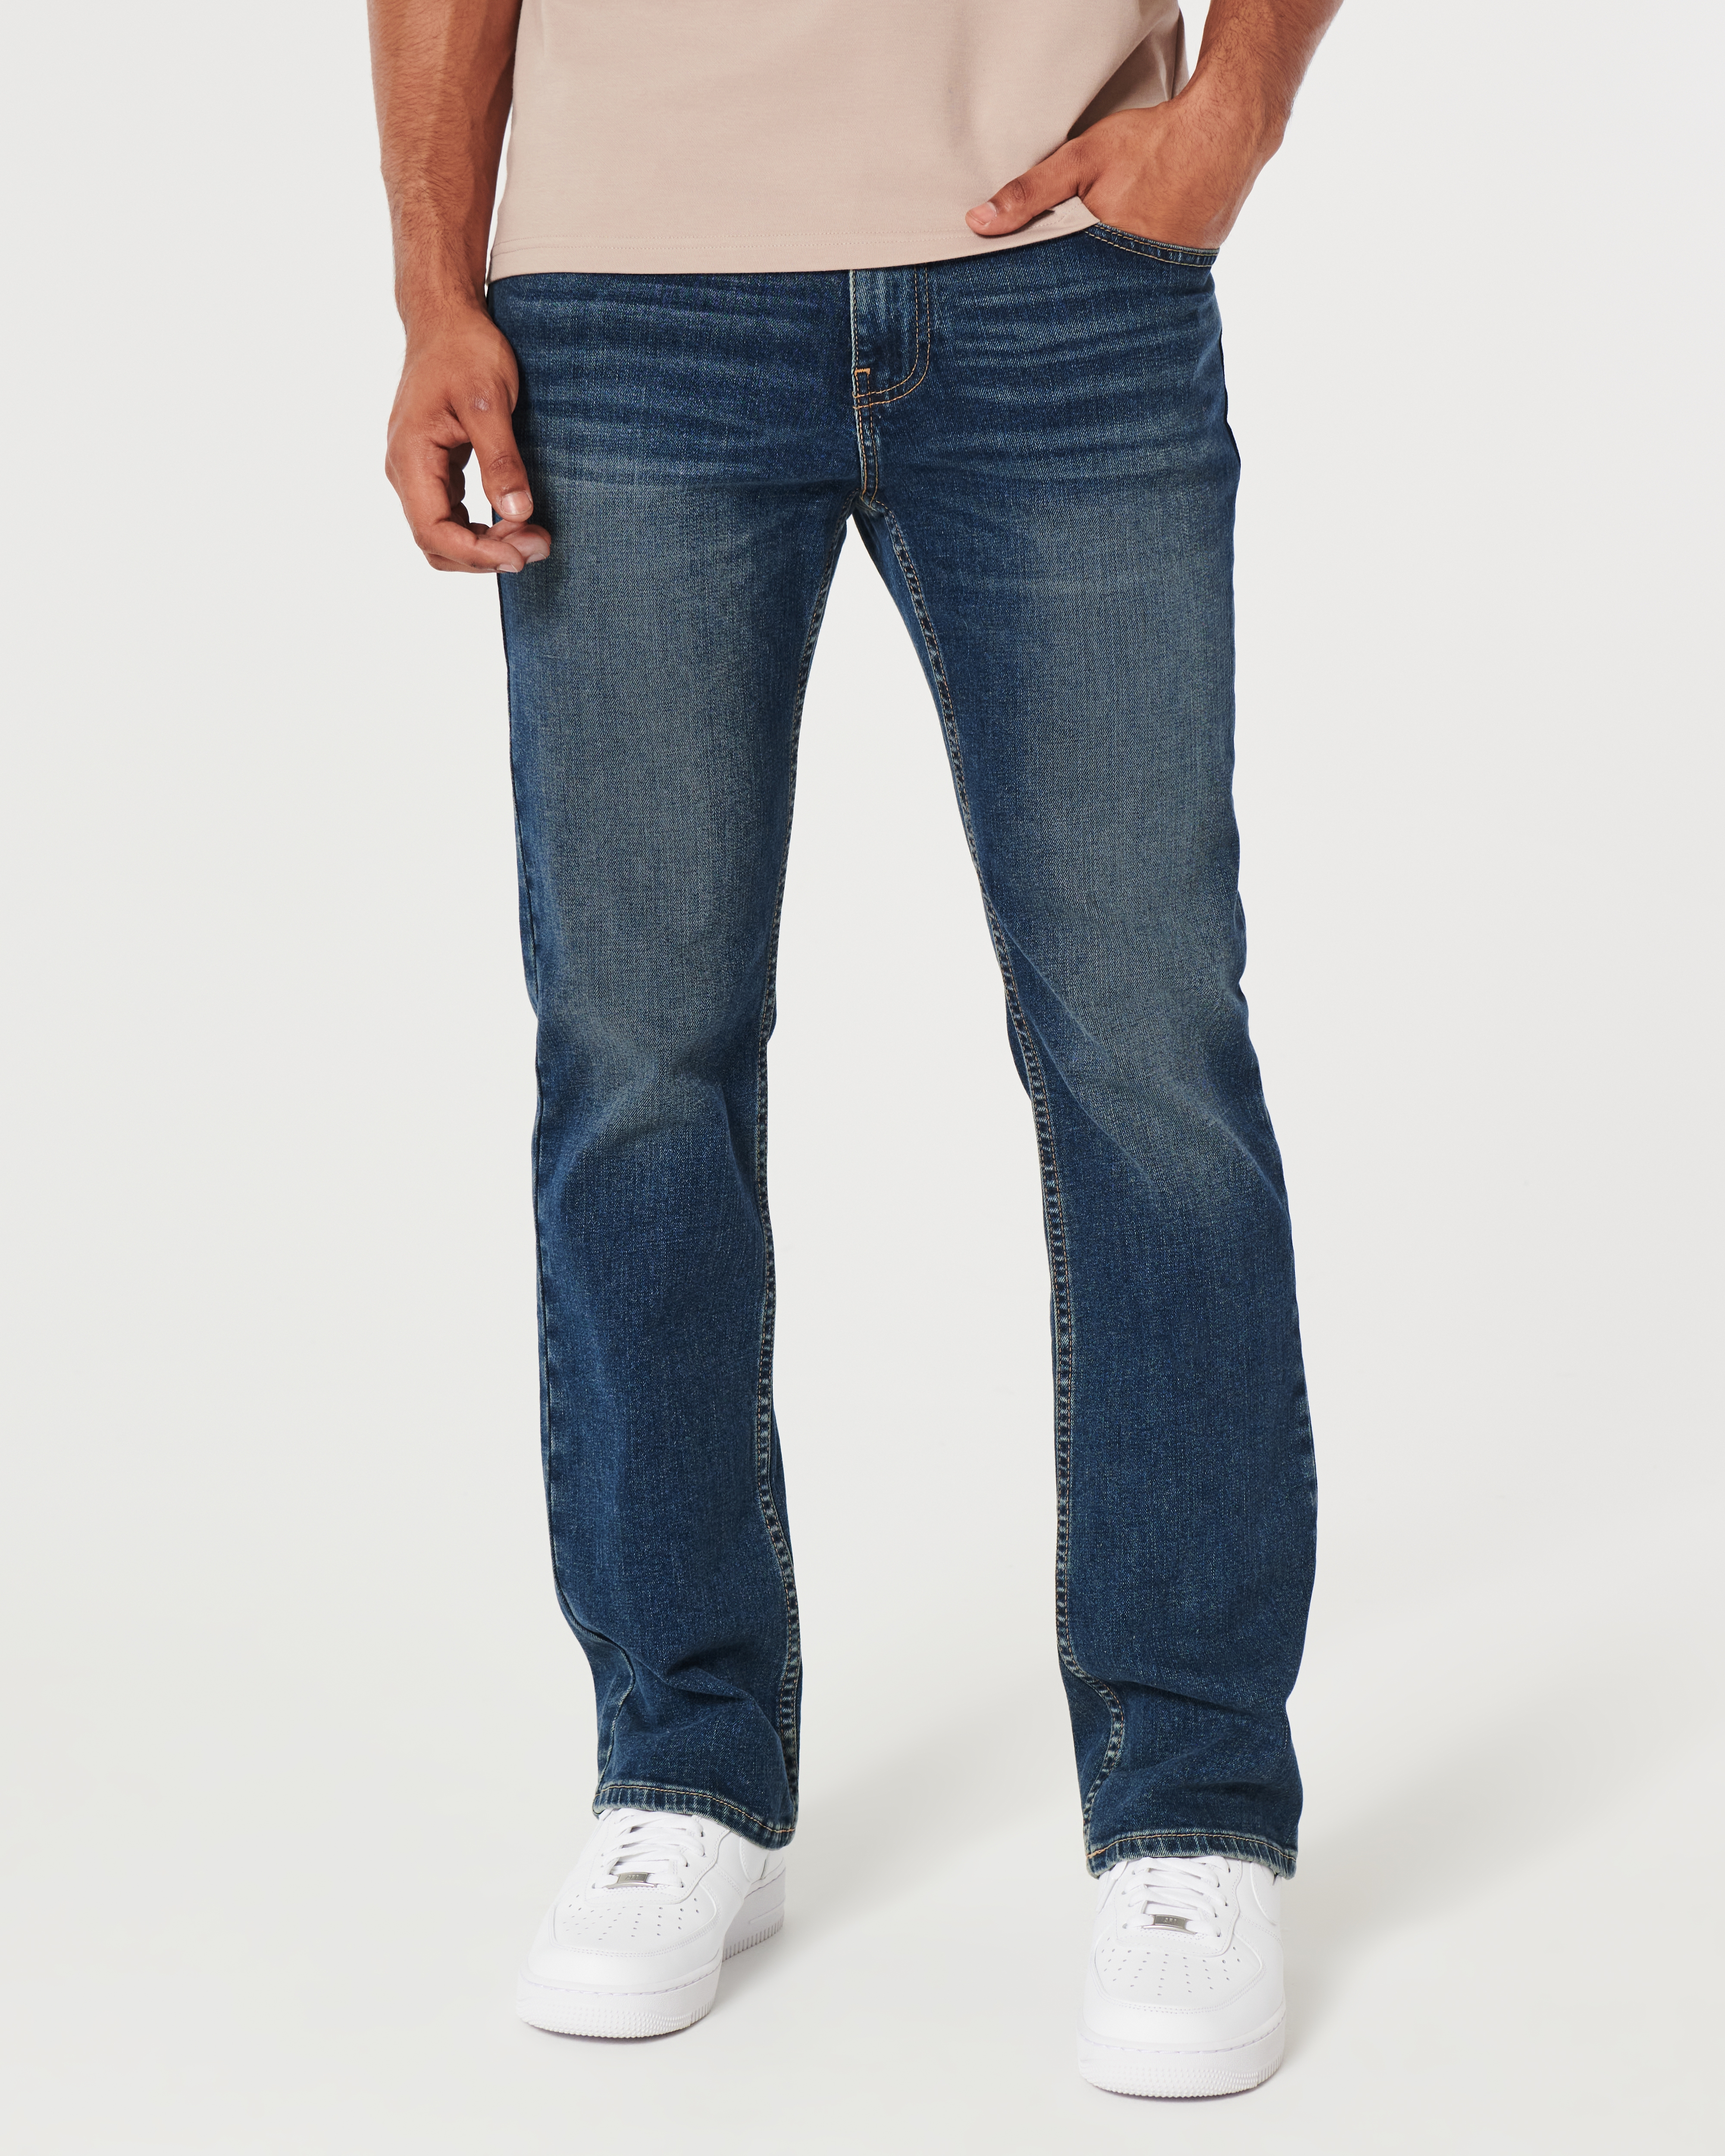 Men's Medium Wash Boot Jeans | Men's Bottoms | HollisterCo.com